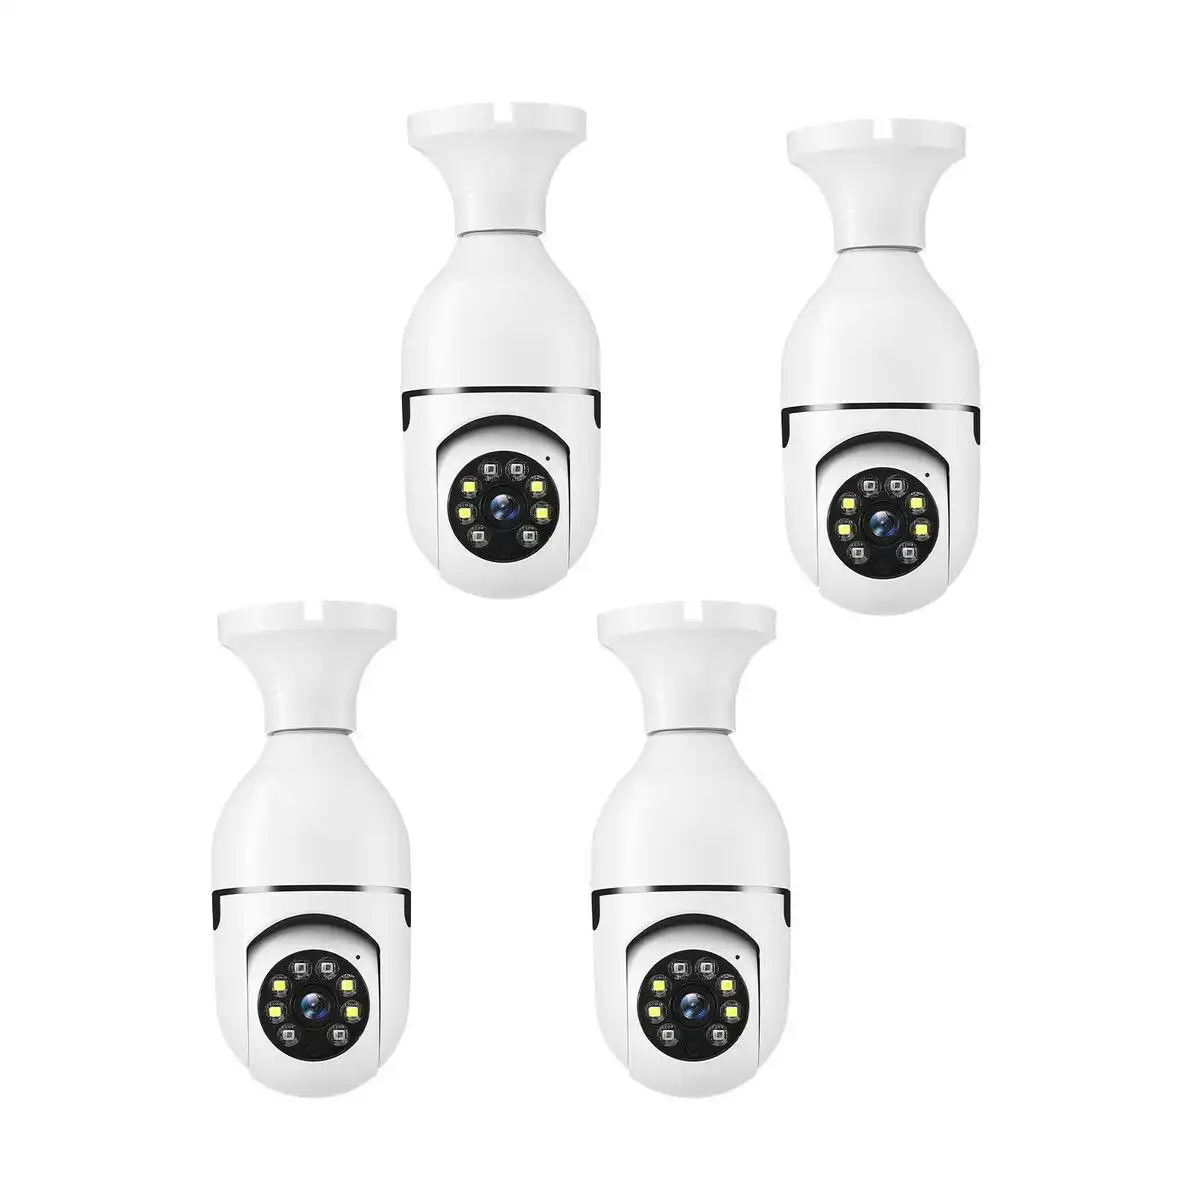 Anisee WiFi IP Camerax4 Wireless Spy Home Security CCTV Surveillance System E27 Light Bulb Outdoor PTZ IR Night Vision 2 Way Audio Full HD 1080P 2MP